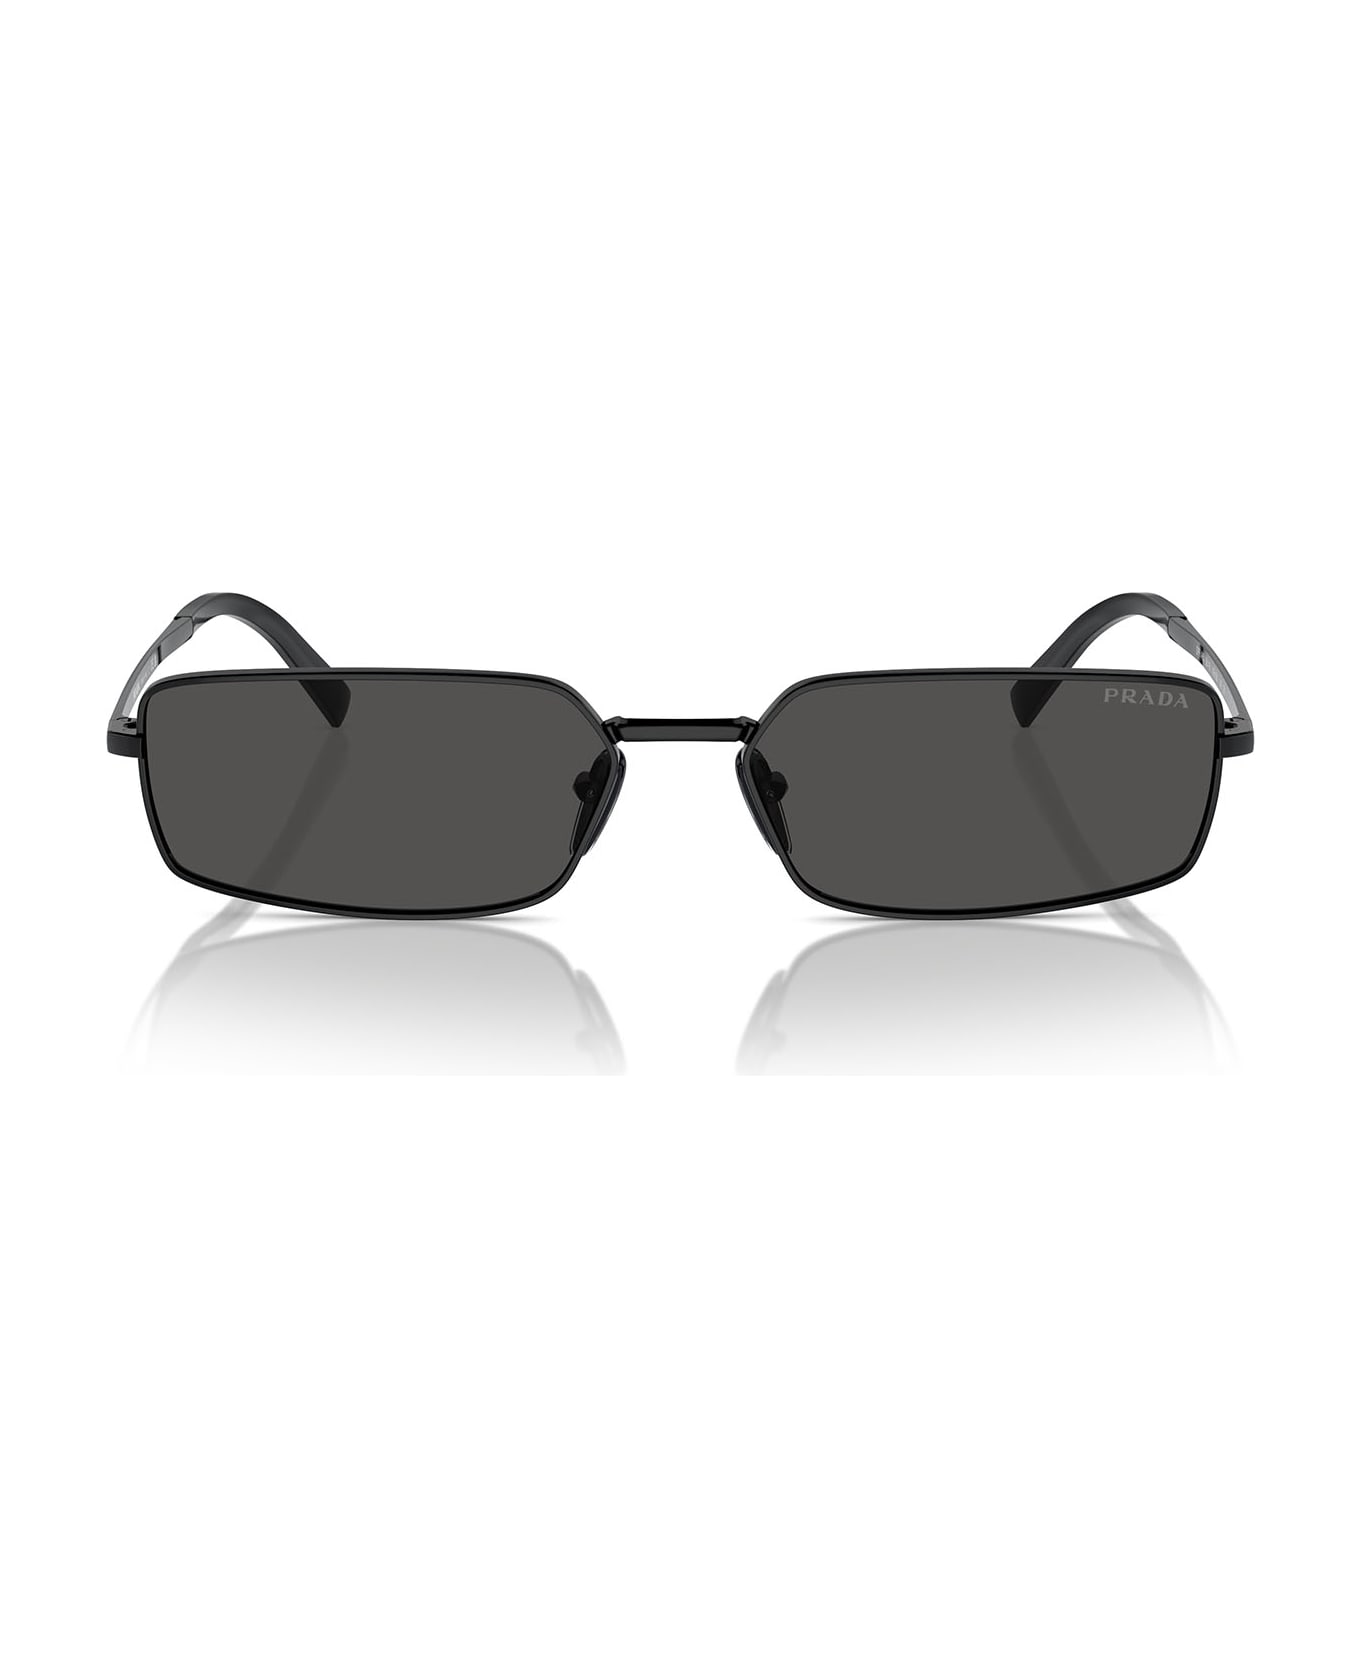 Prada Eyewear Pr A60s Black Sunglasses - Black